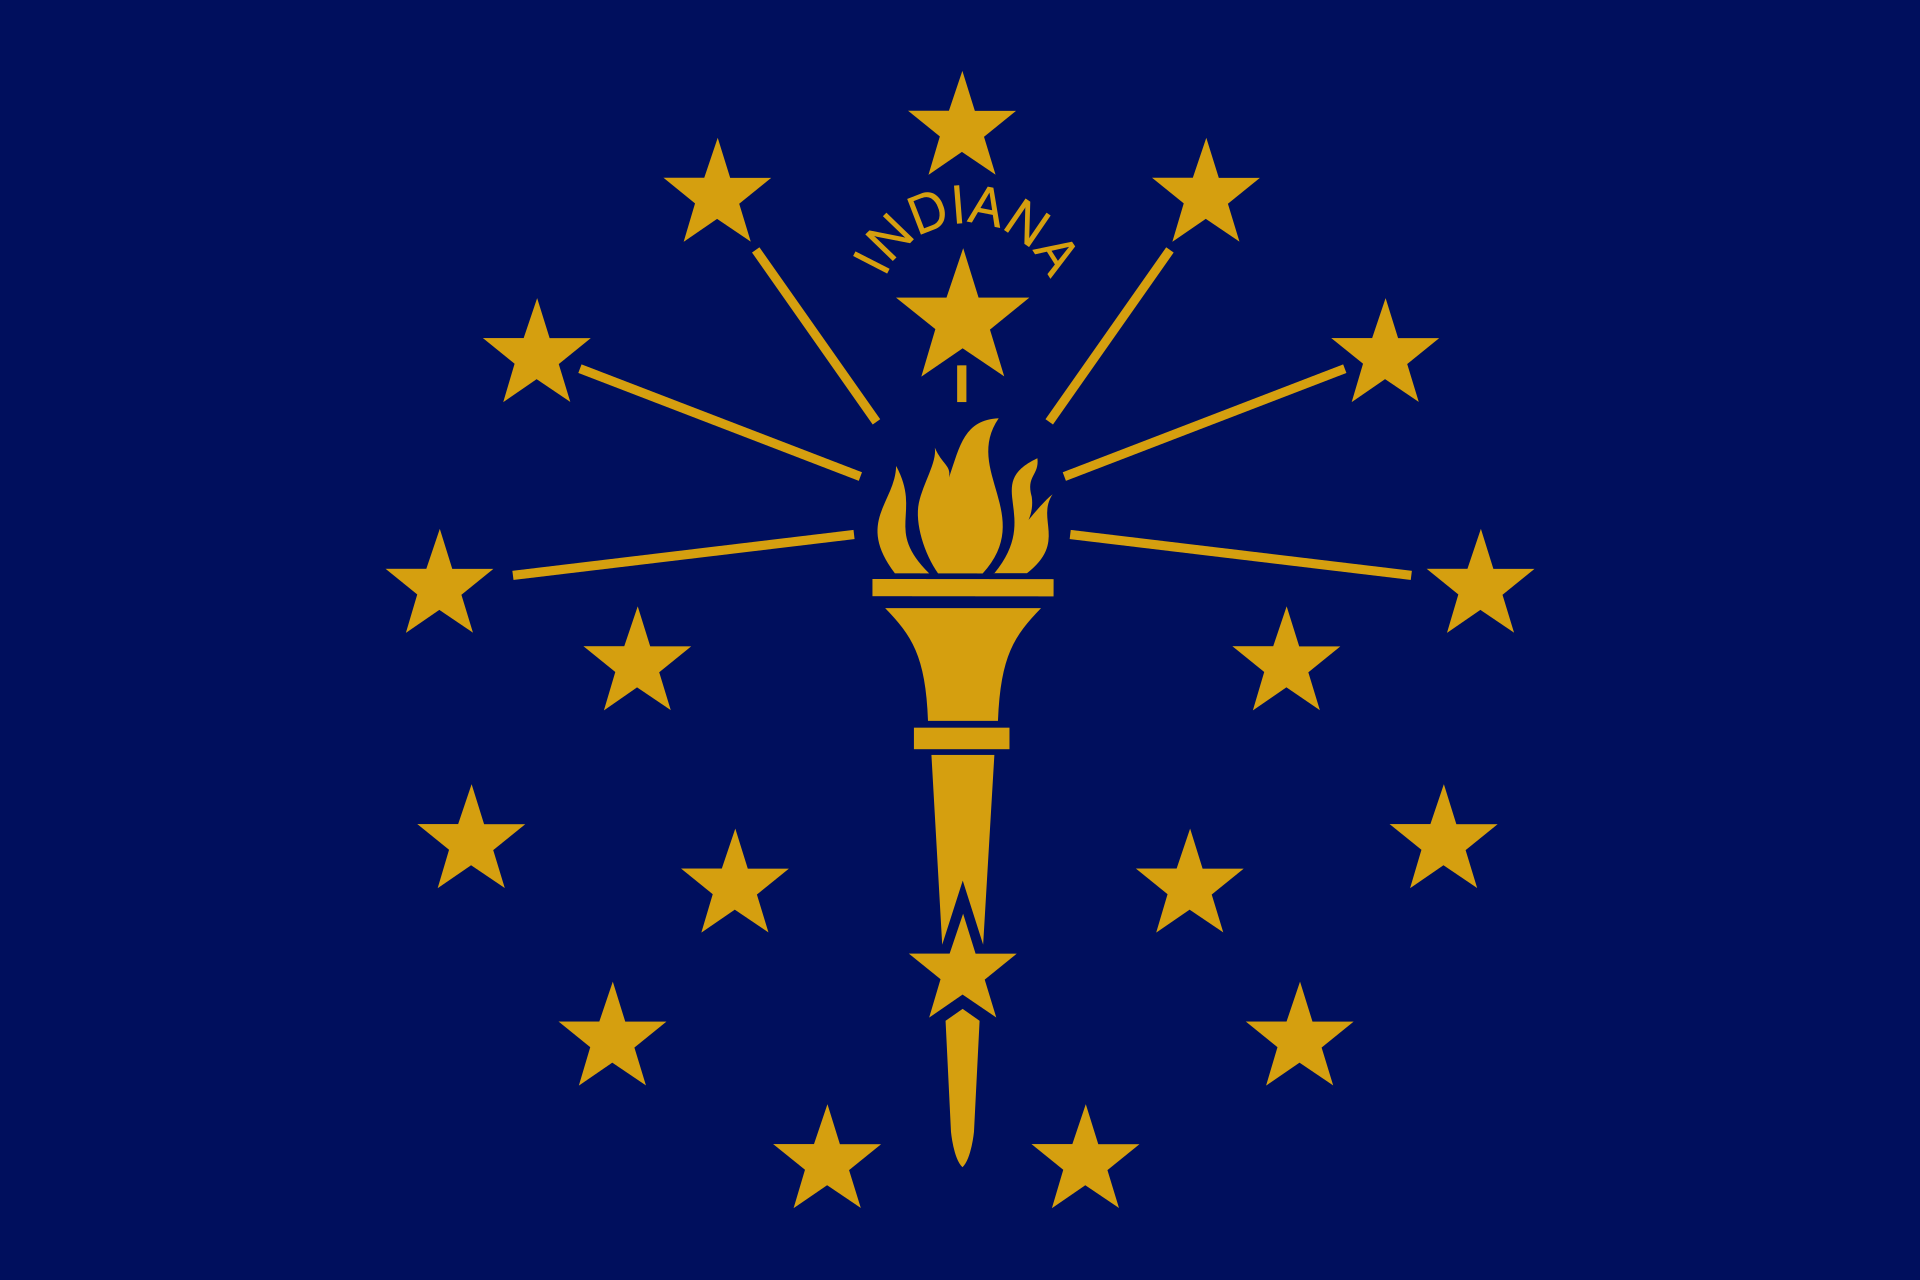 Indiana state flag - Indiana web design